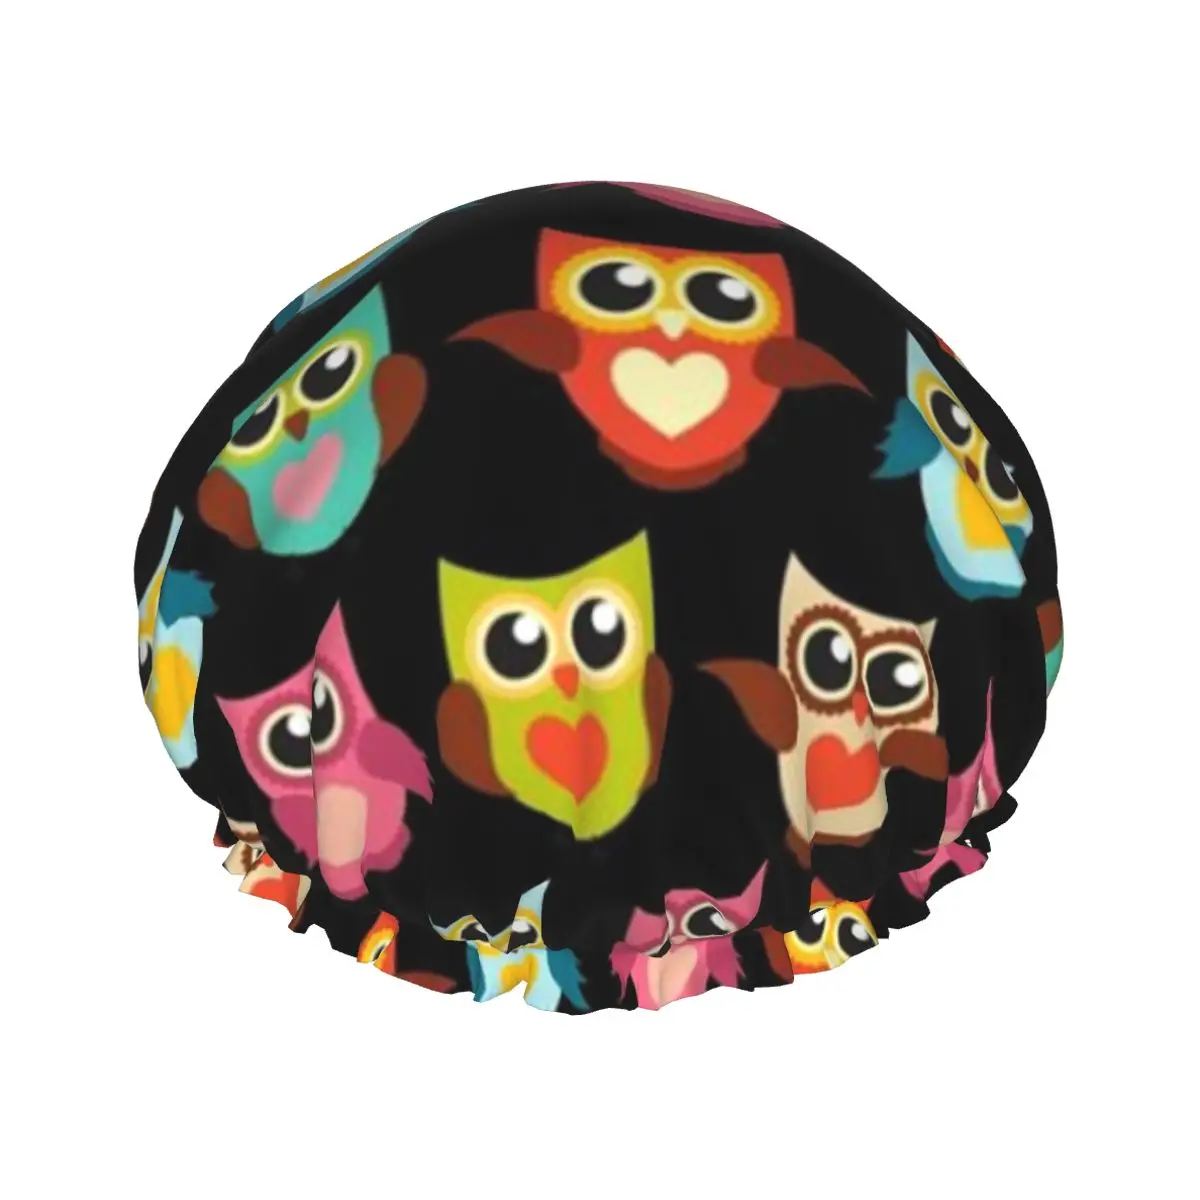 

Owl In Colorful Waterproof Shower Cap with Elasticized Hem Reversible Design for Shower Sleeping Bonnet Cap for All Hair Lengths